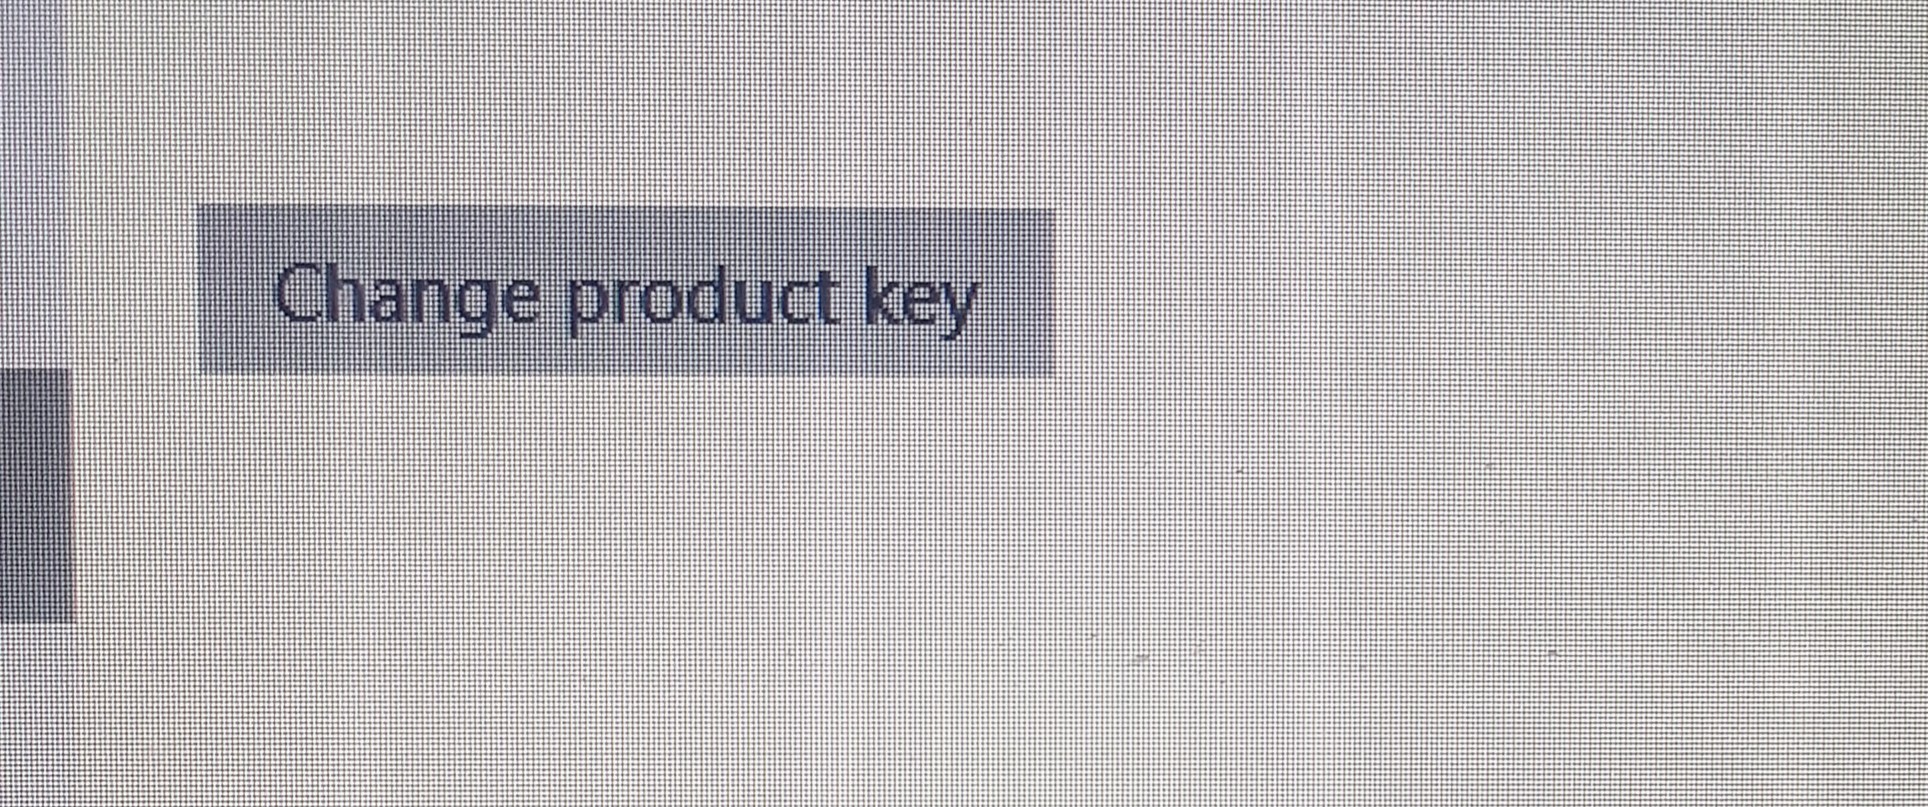 windows 10 change key